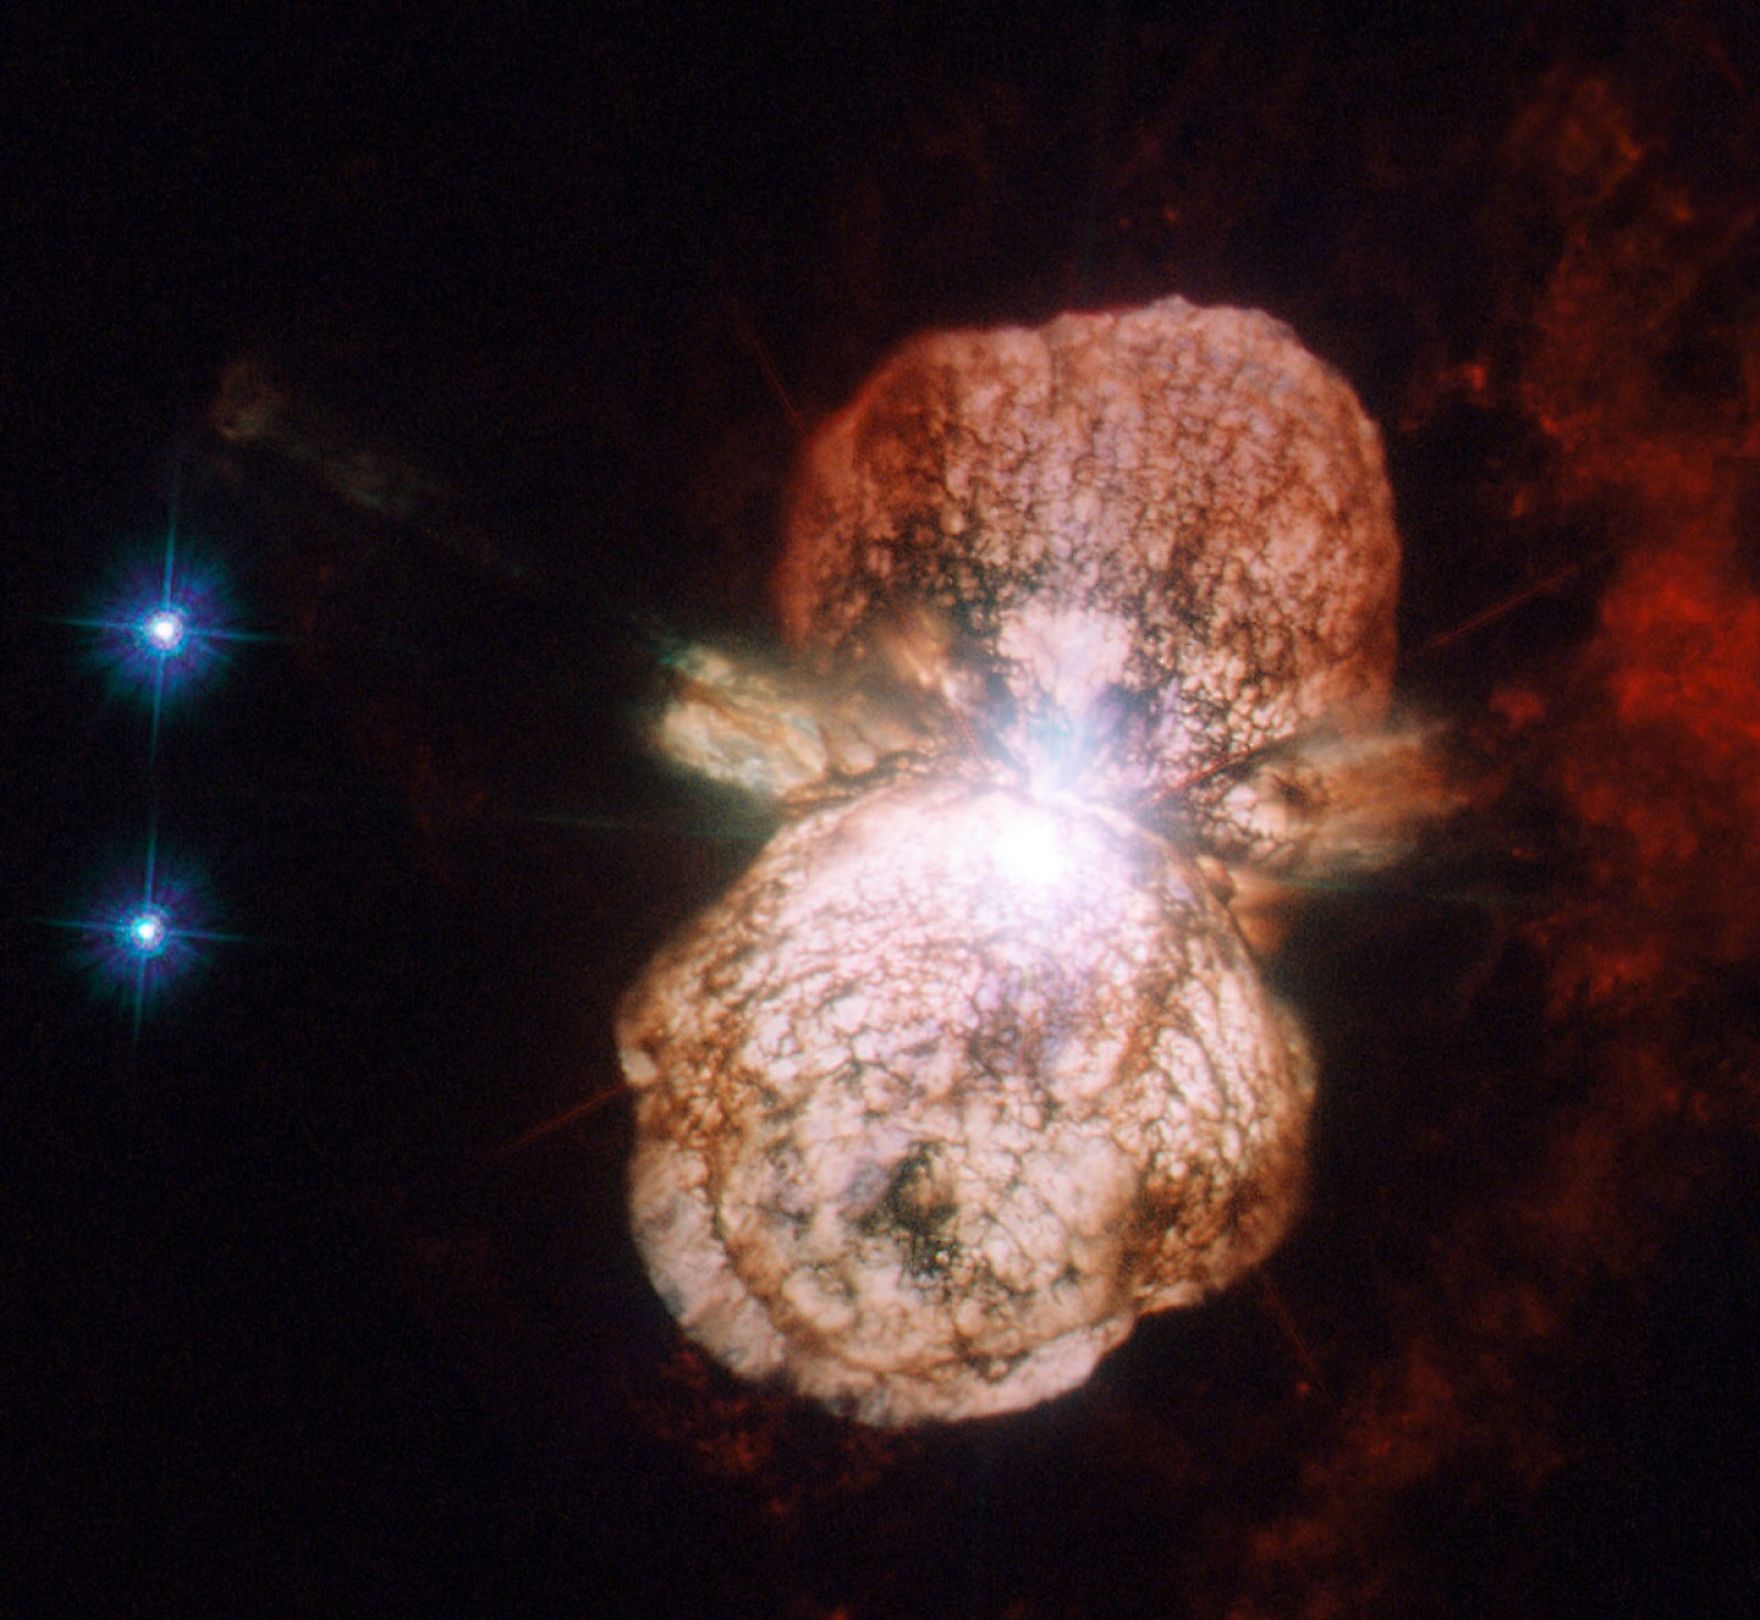 The Eta Carinae system. Image credit: NASA/ESA